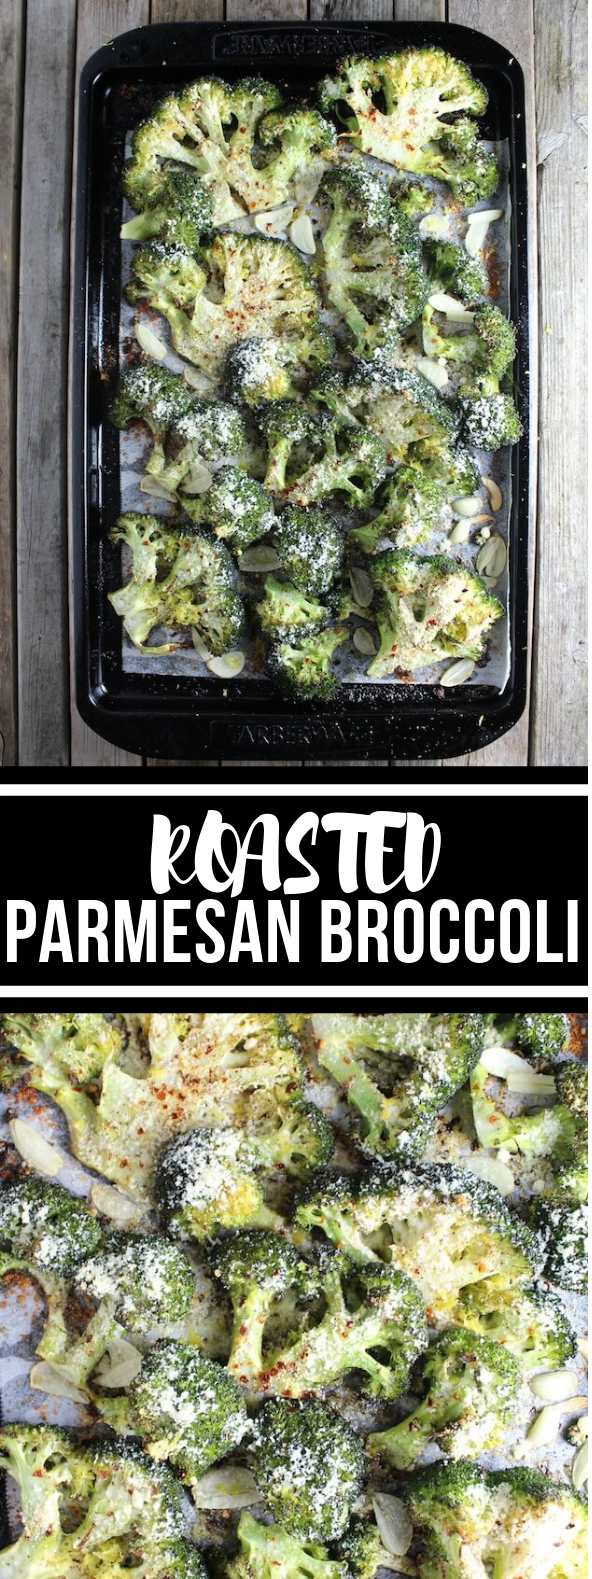 ROASTED PARMESAN BROCCOLI #vegetarian #veggies